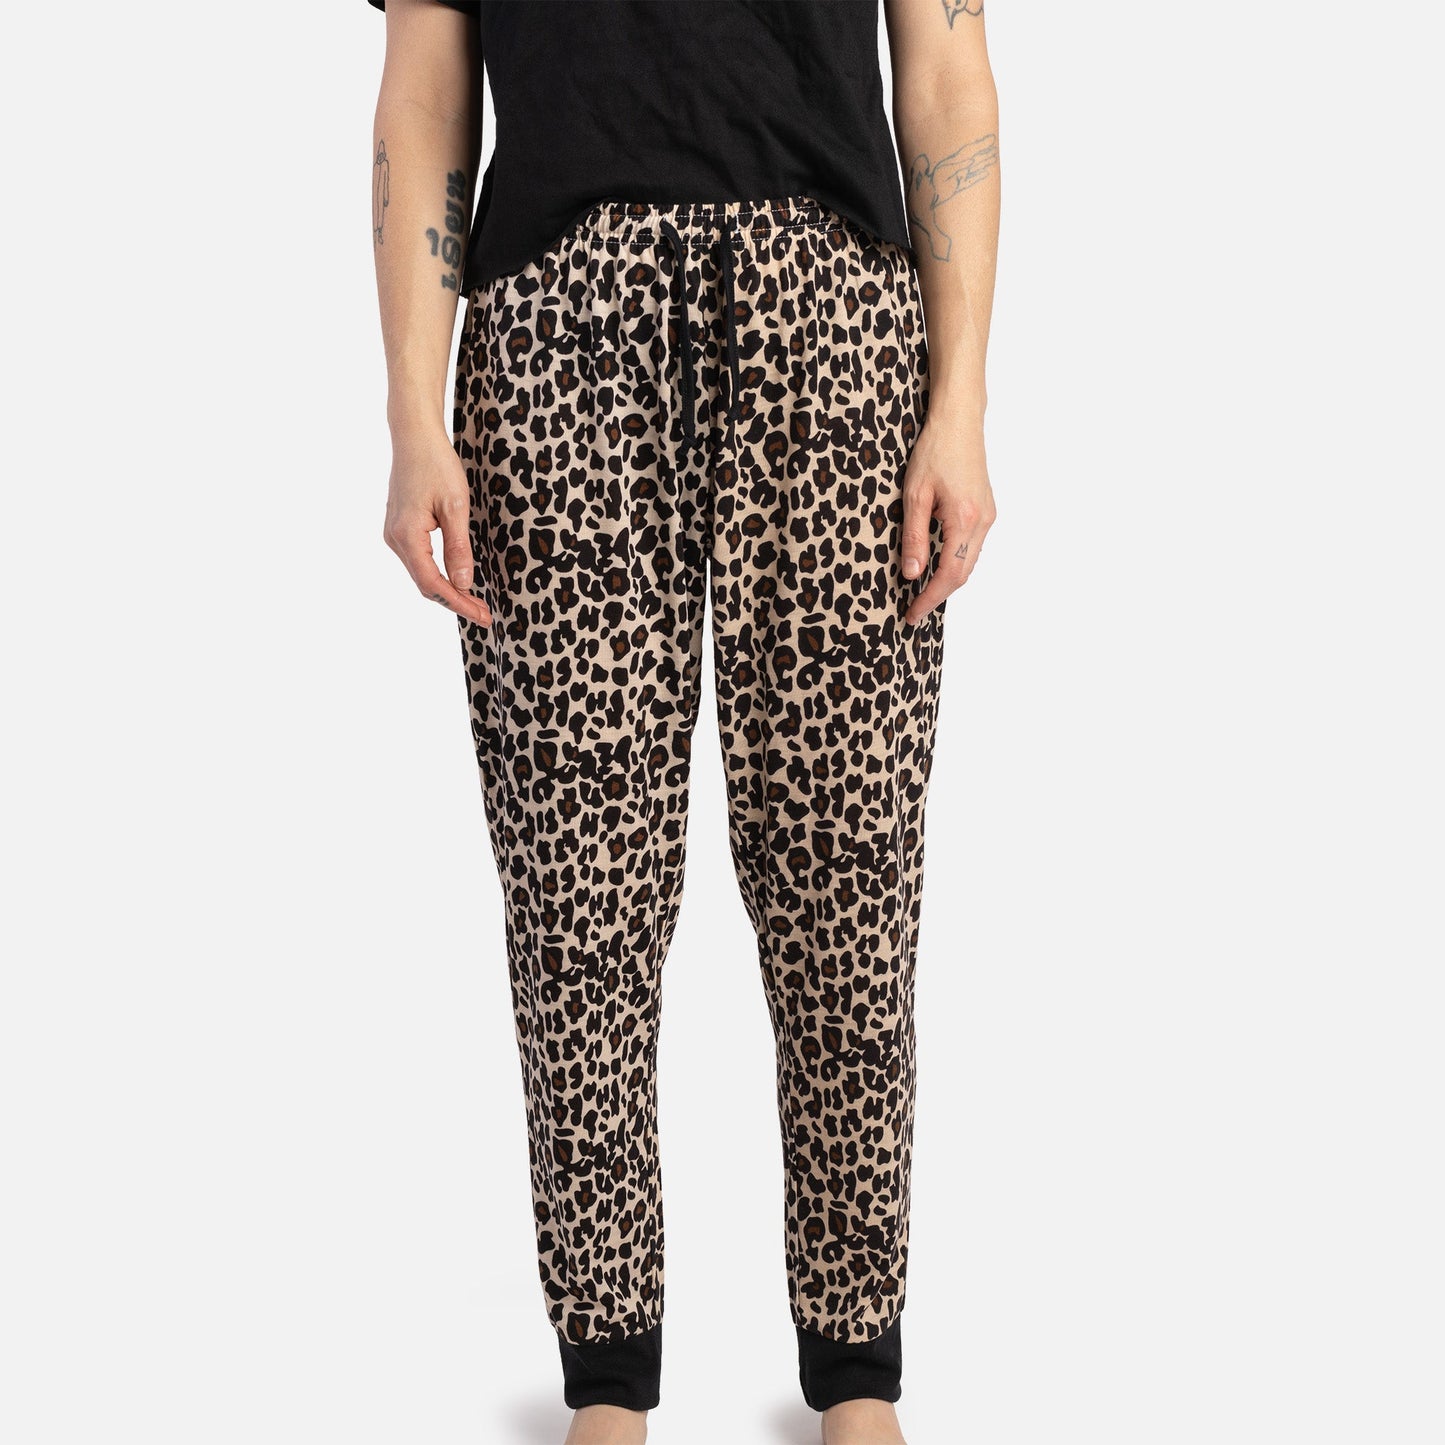 Matching Human Pajama - Leopard – Silver Paw